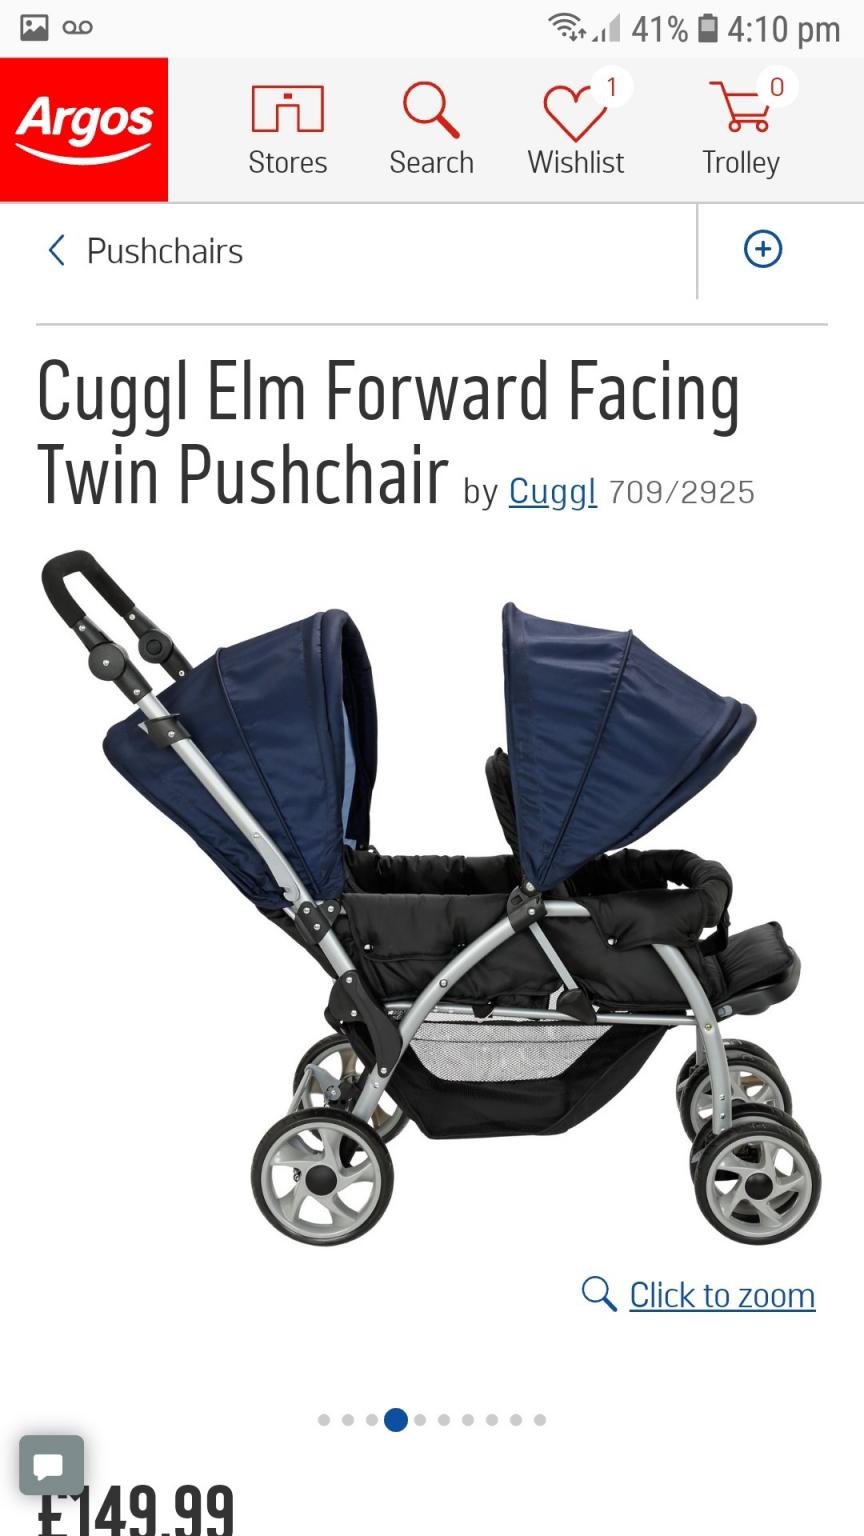 cuggl elm twin pushchair reviews